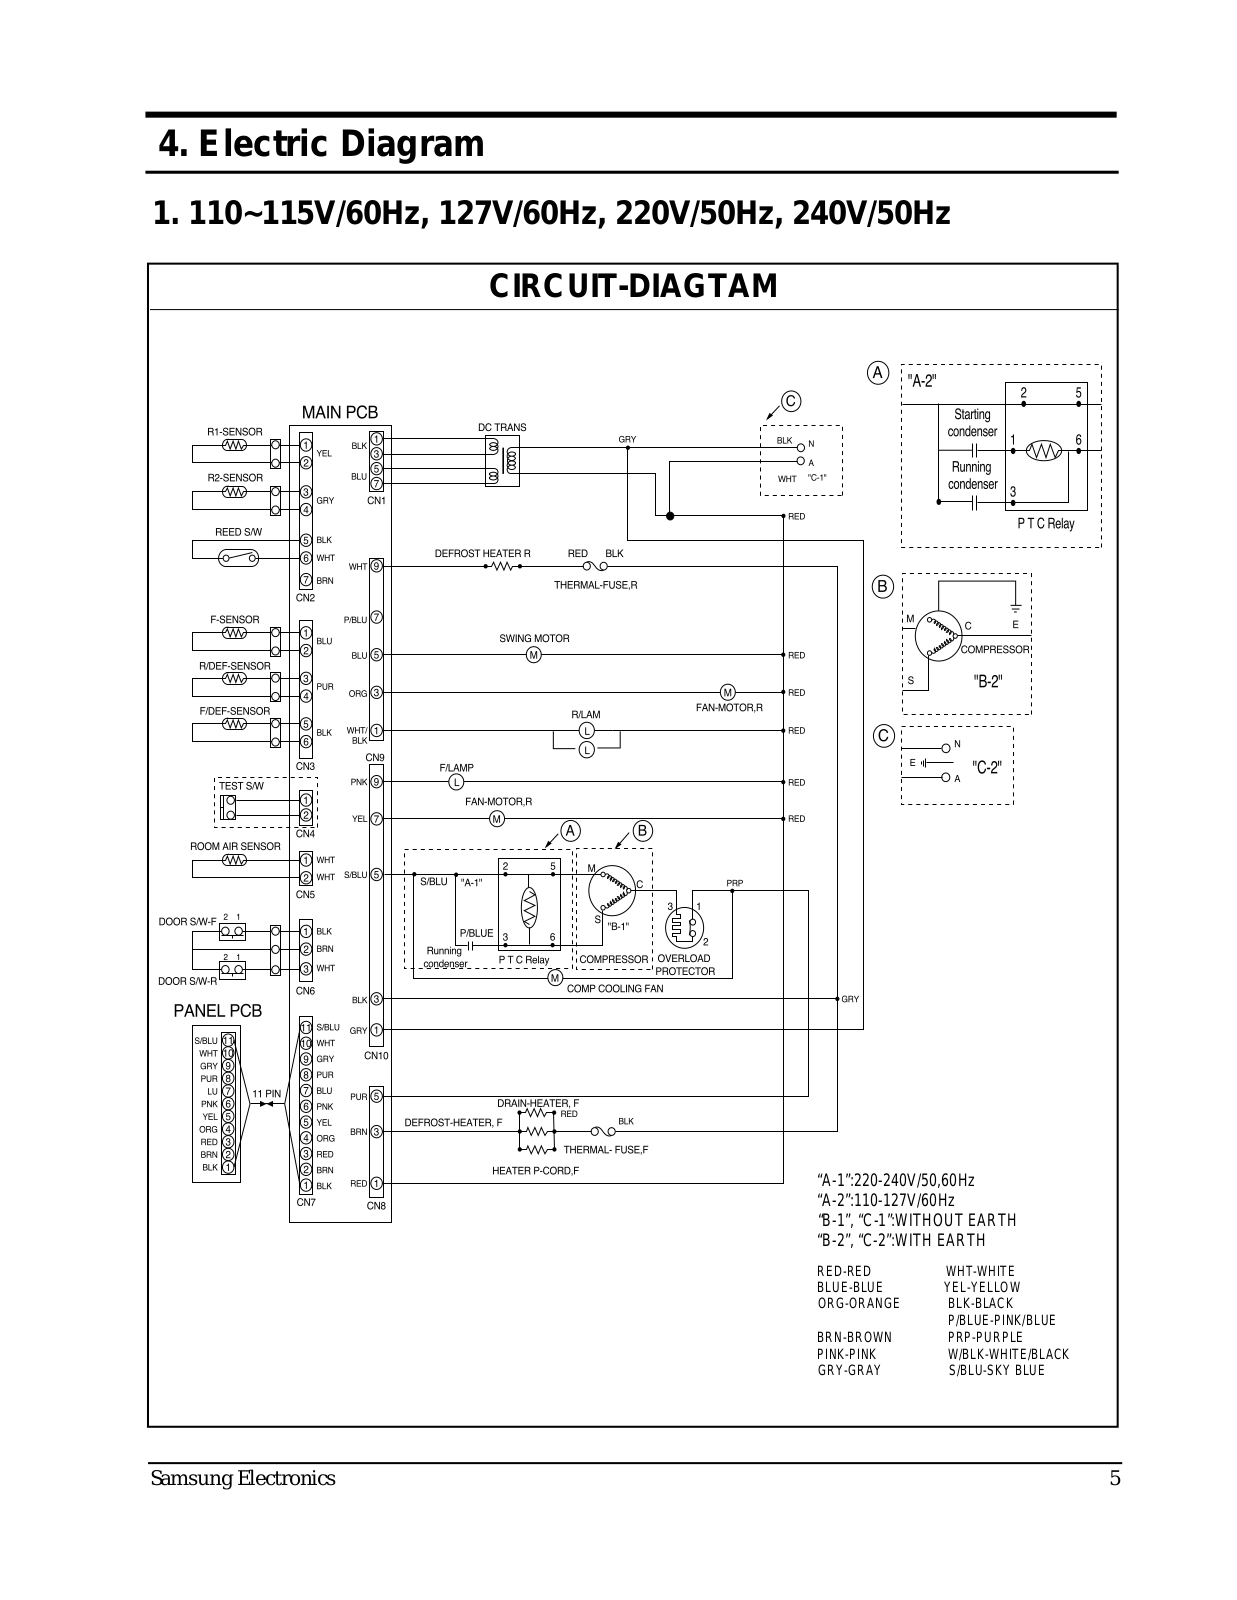 Samsung SG648, SG688, SG606, BG606, BG60 Schematics Diagram